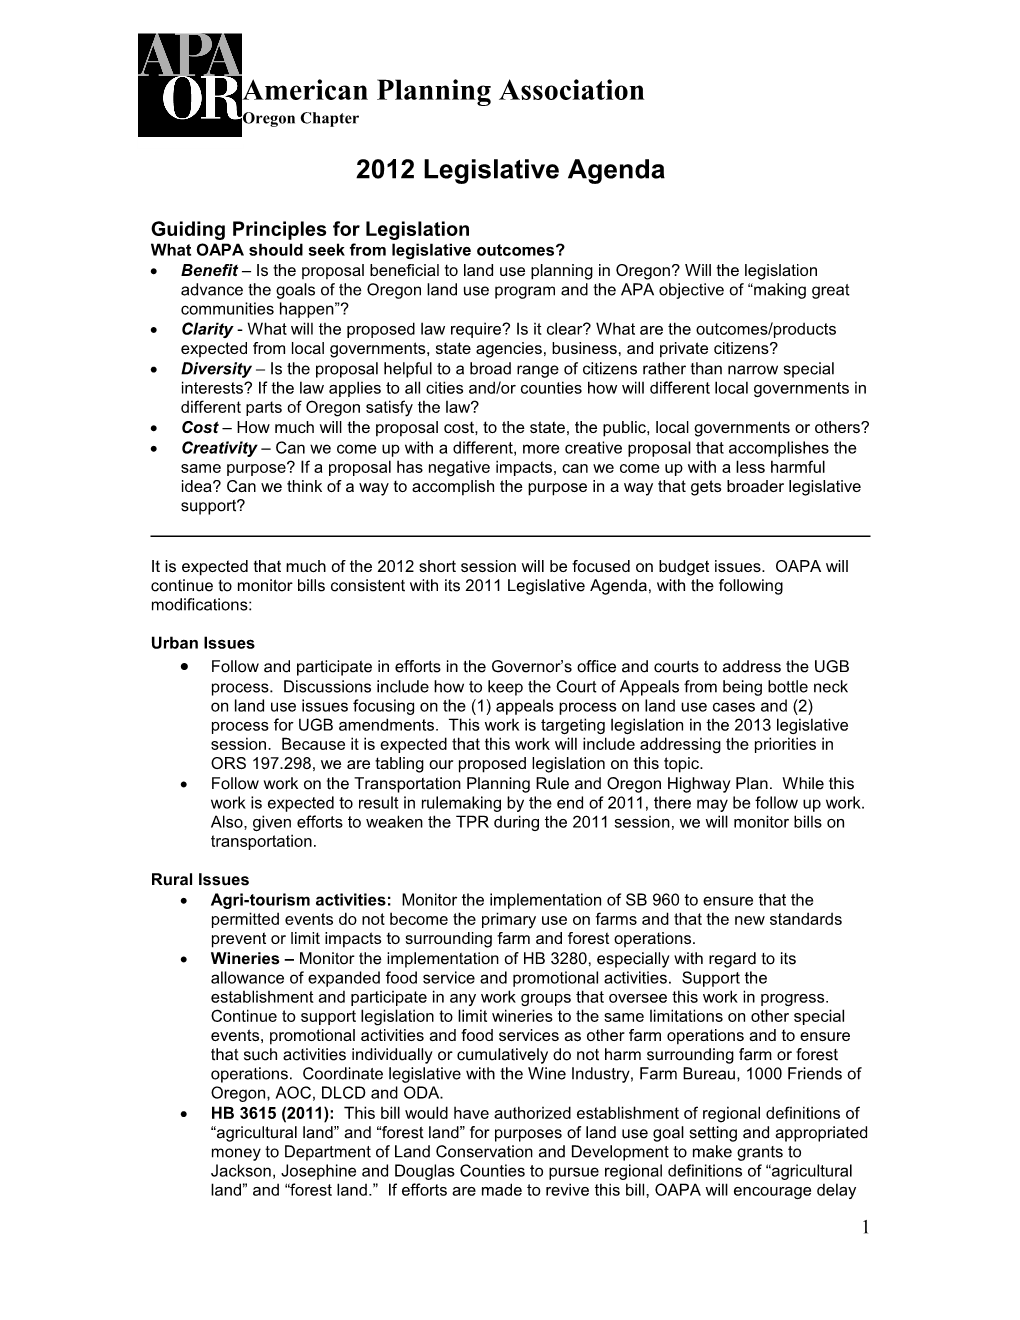 What OAPA Should Seek from Legislative Outcomes?